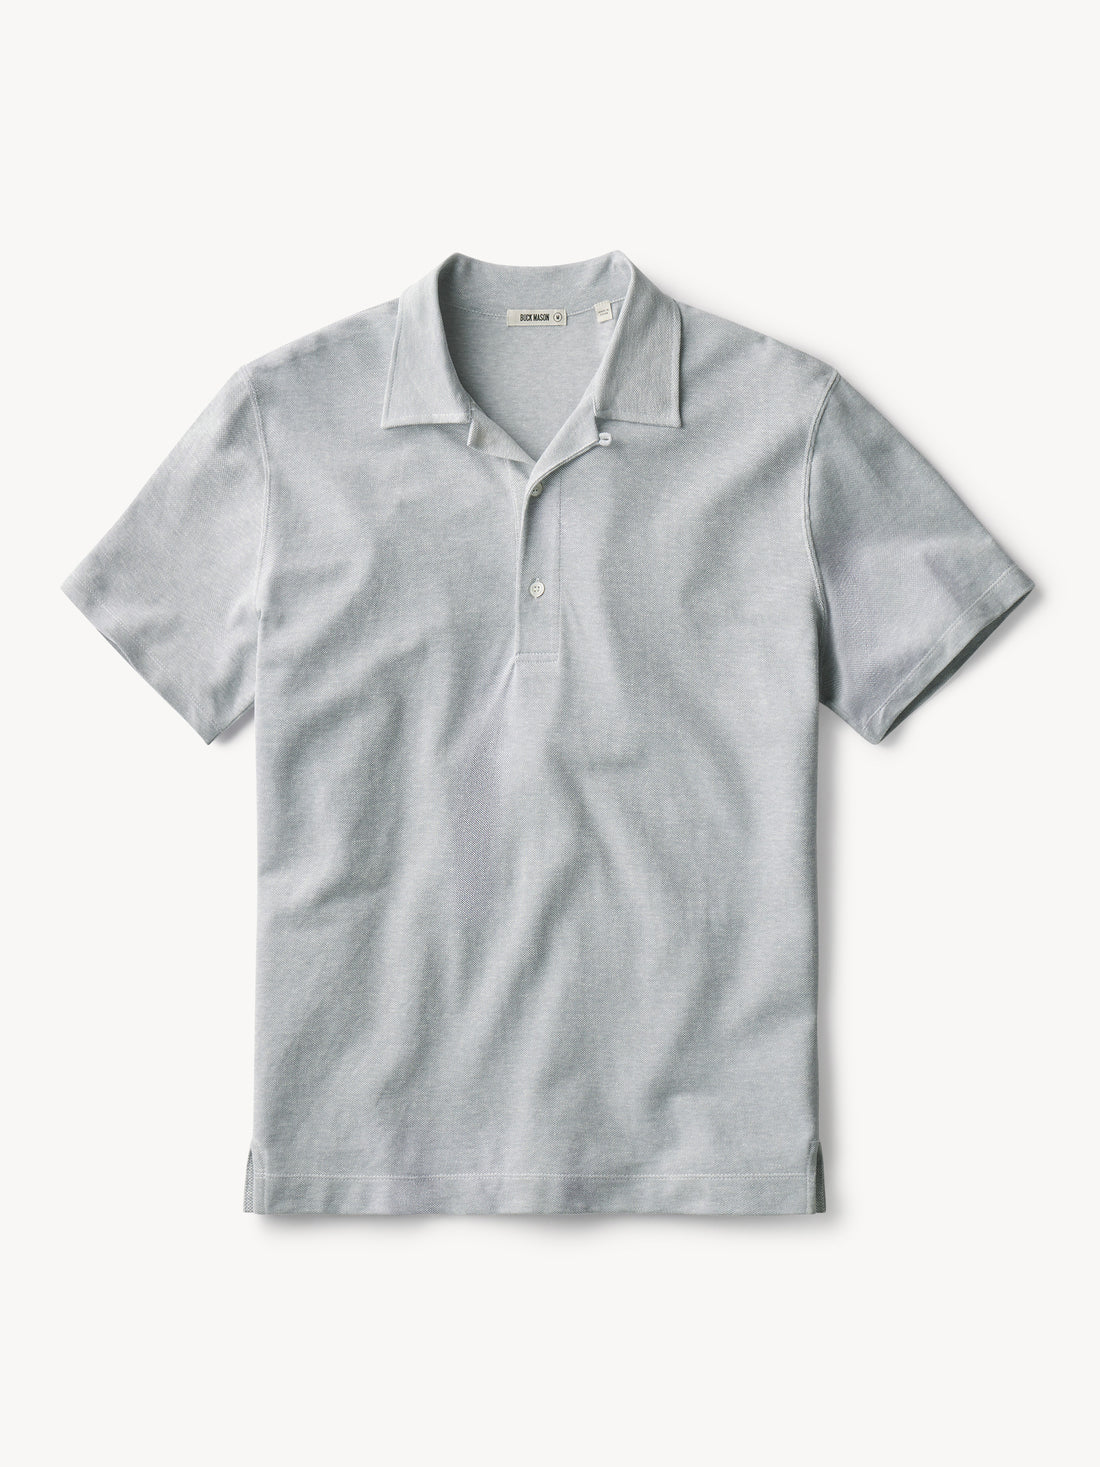 1930s Mens Shirts | Dress Shirts, Polo Shirts, Work Shirts LINEN PIQUE POLO Buck Mason   AT vintagedancer.com